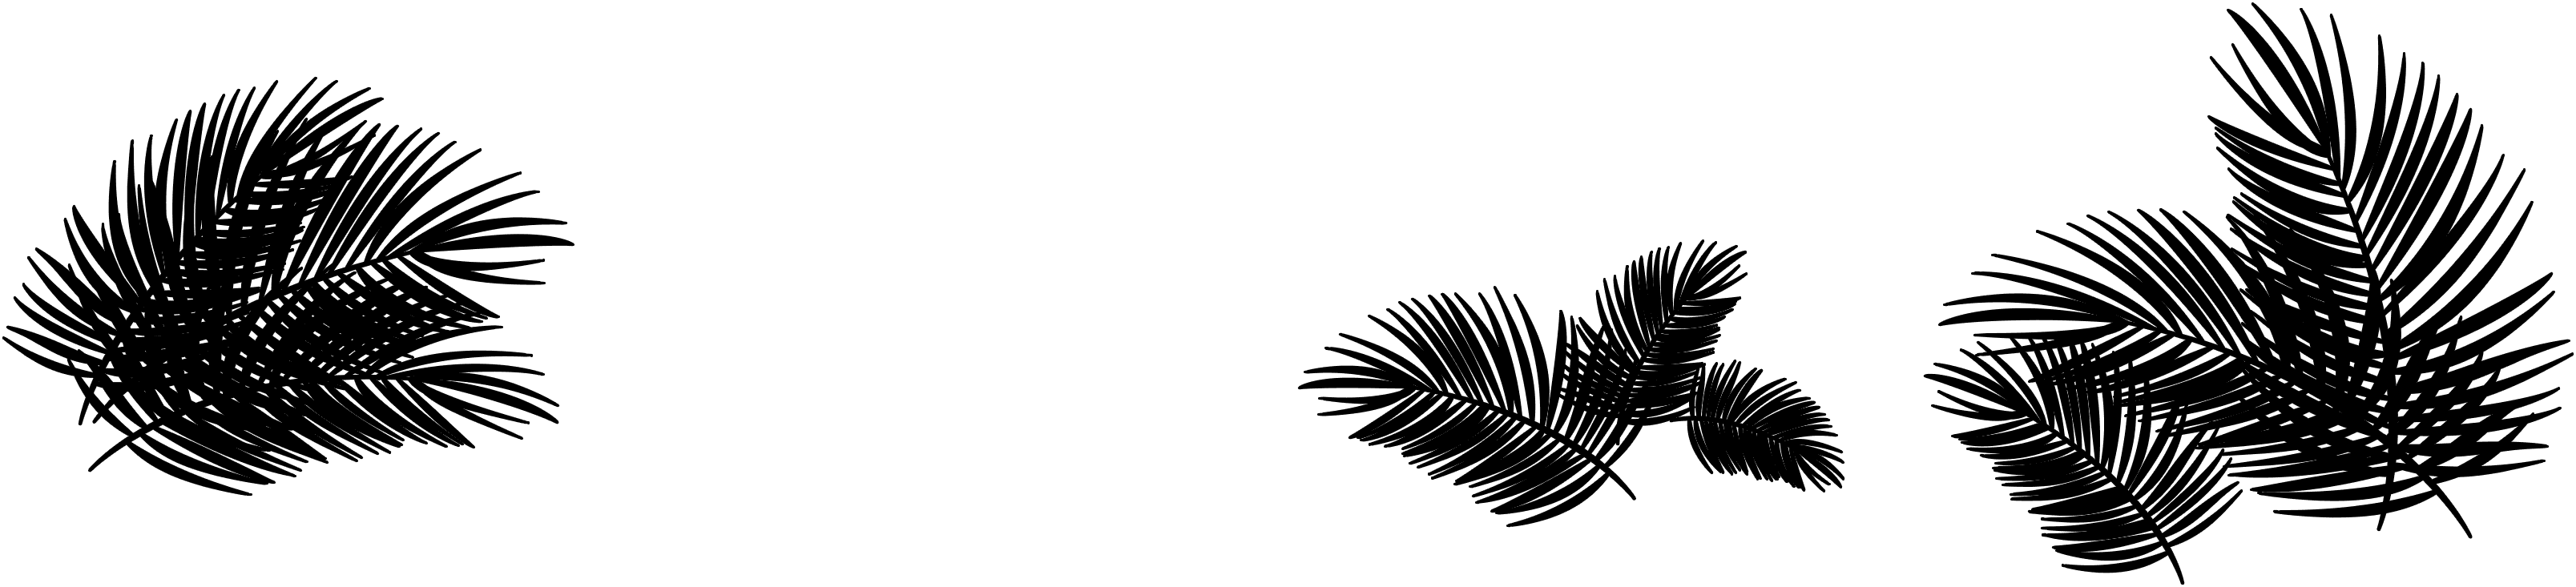 divider-palmtree